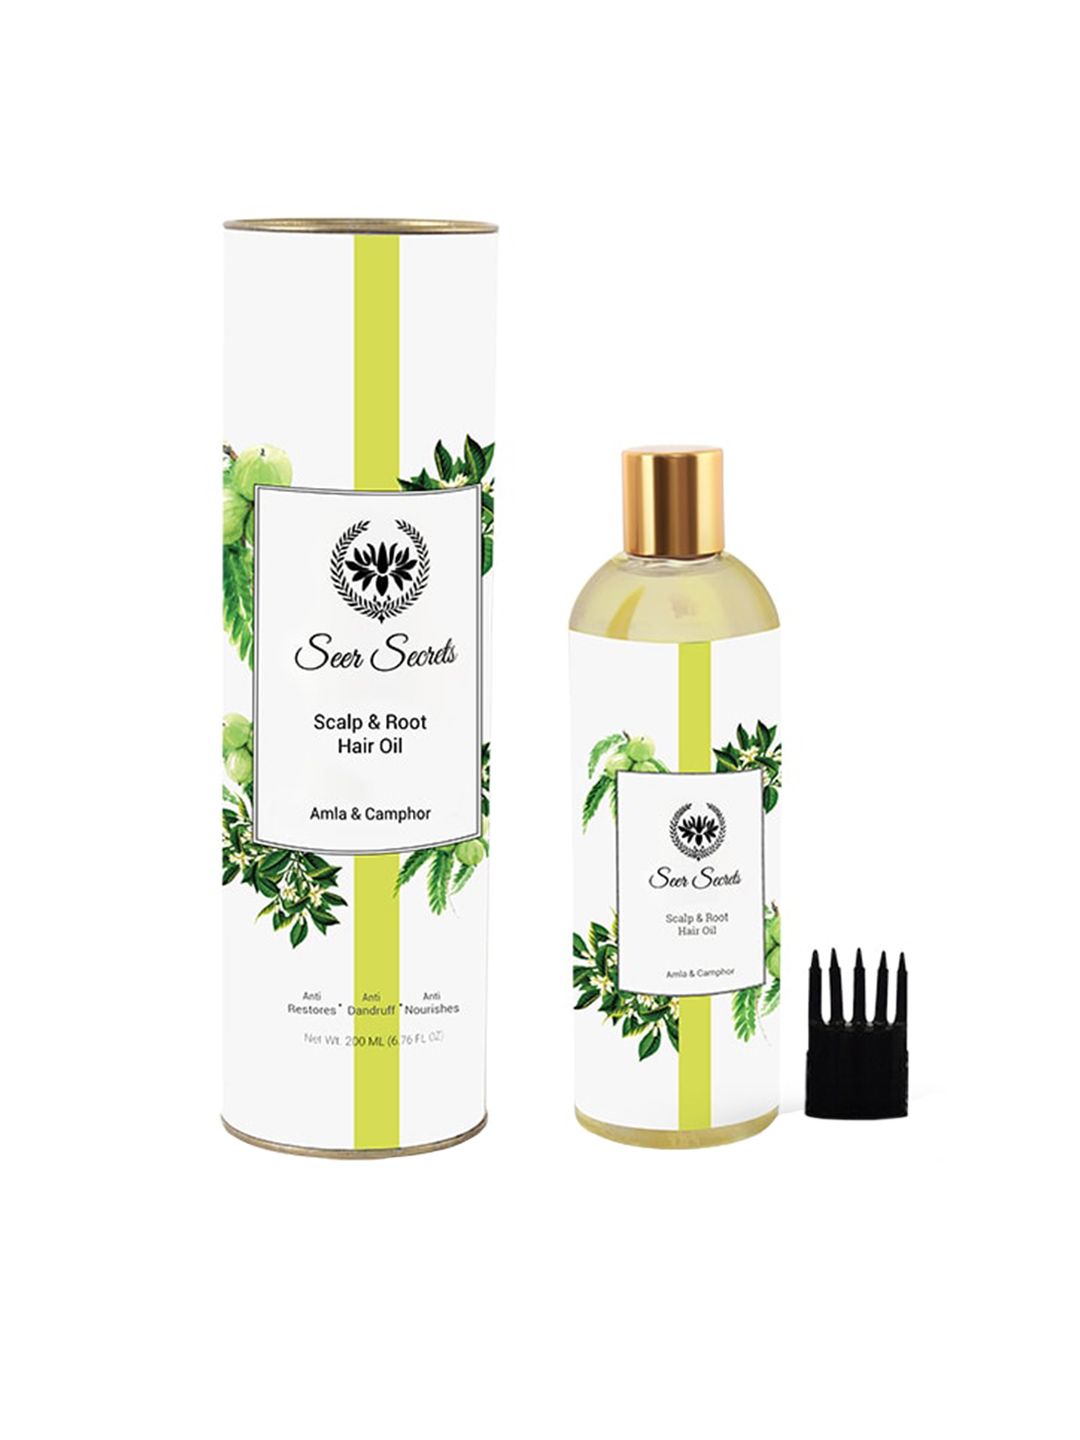 Seer Secrets Scalp & Root Hair Oil - Amla & Camphor 200 ml Price in India